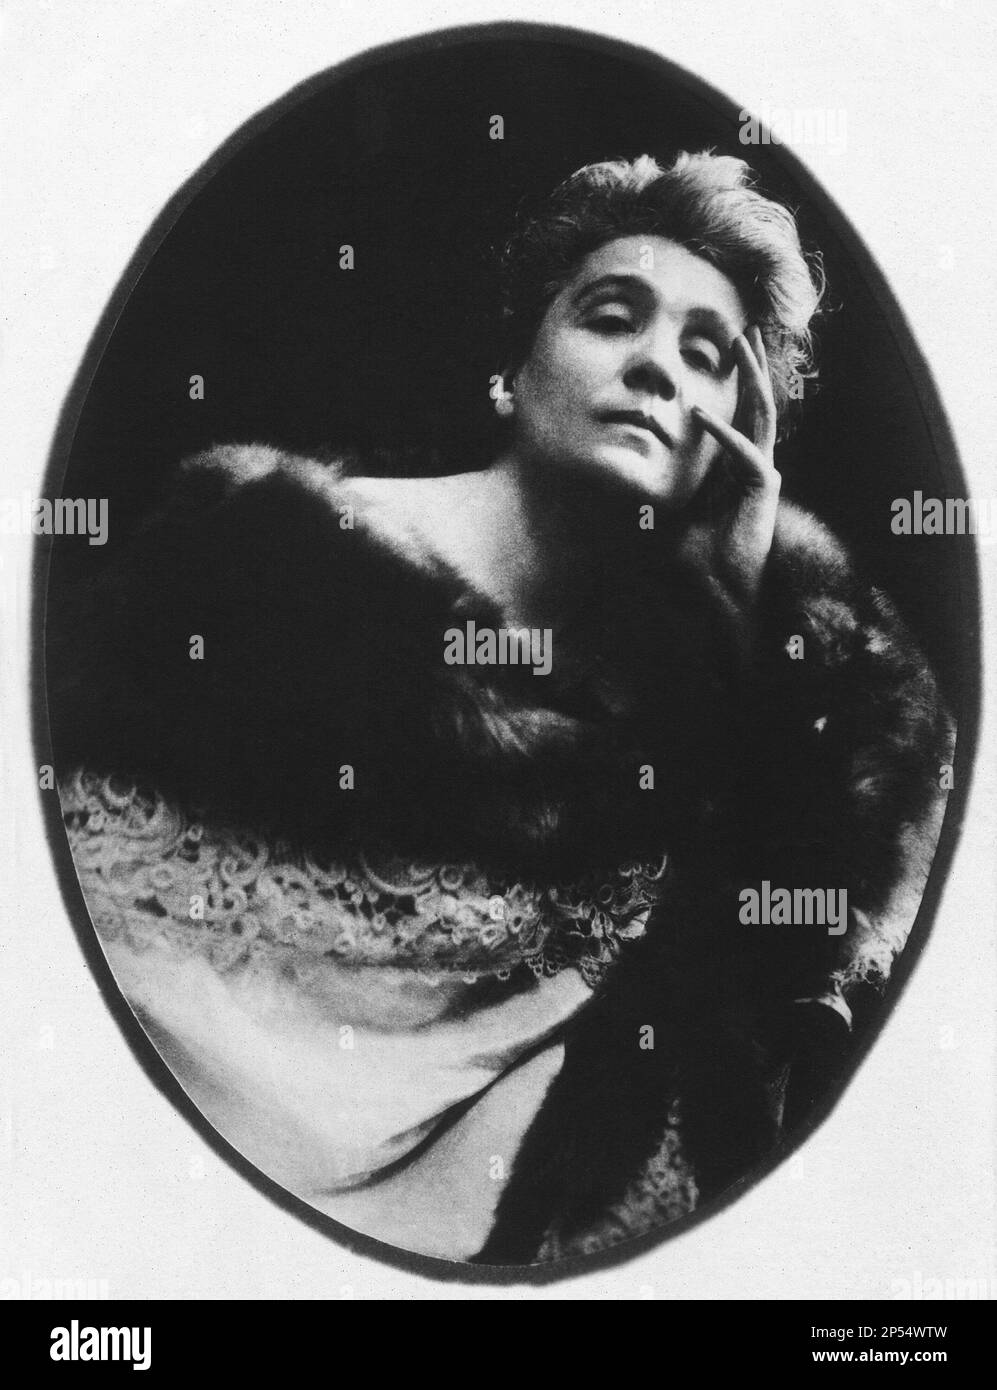 1900 c, ITALIEN: Die berühmteste italienische Schauspielerin ELEONORA DUSE ( 1858 - 1924 ) , die die Dichterin Gabriele D'ANNUNZIO - D' ANNUNZIO - DANNUNZIO - Theaterstück - TEATRO - PIZZO - SPITZE - PELLICCIA - PELLICCIA - PELZFELL - DIVA - DIVINA - Portrait - ritratto - attrice teatrale --- Archivio -- Stockfoto